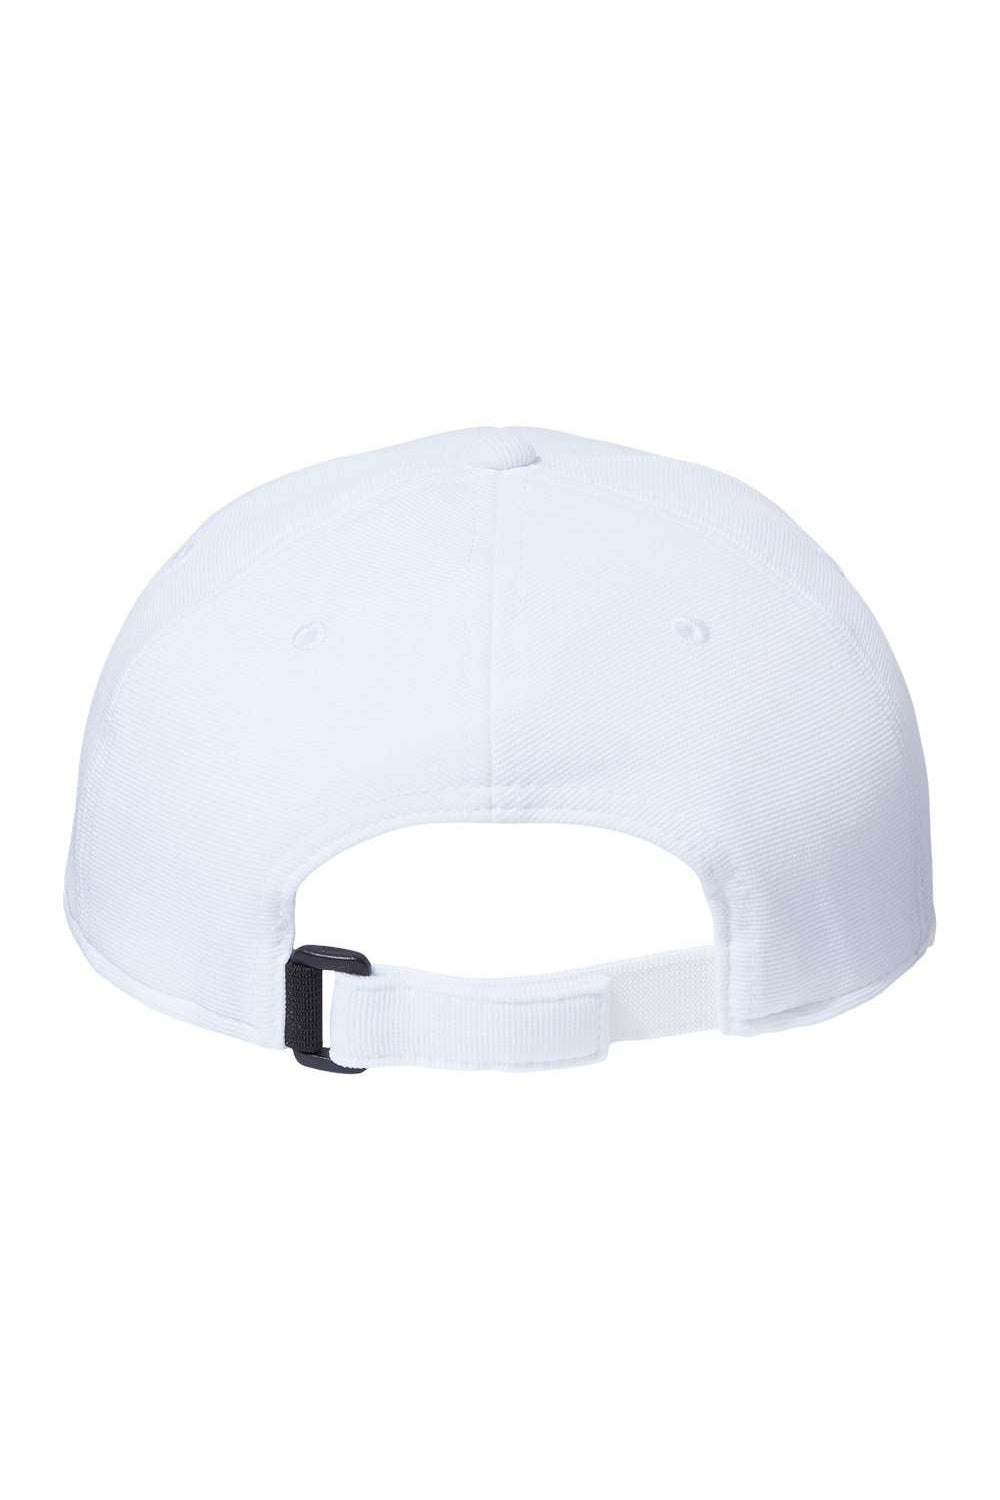 Atlantis Headwear SAND Mens Sustainable Performance Adjustable Hat White Flat Back